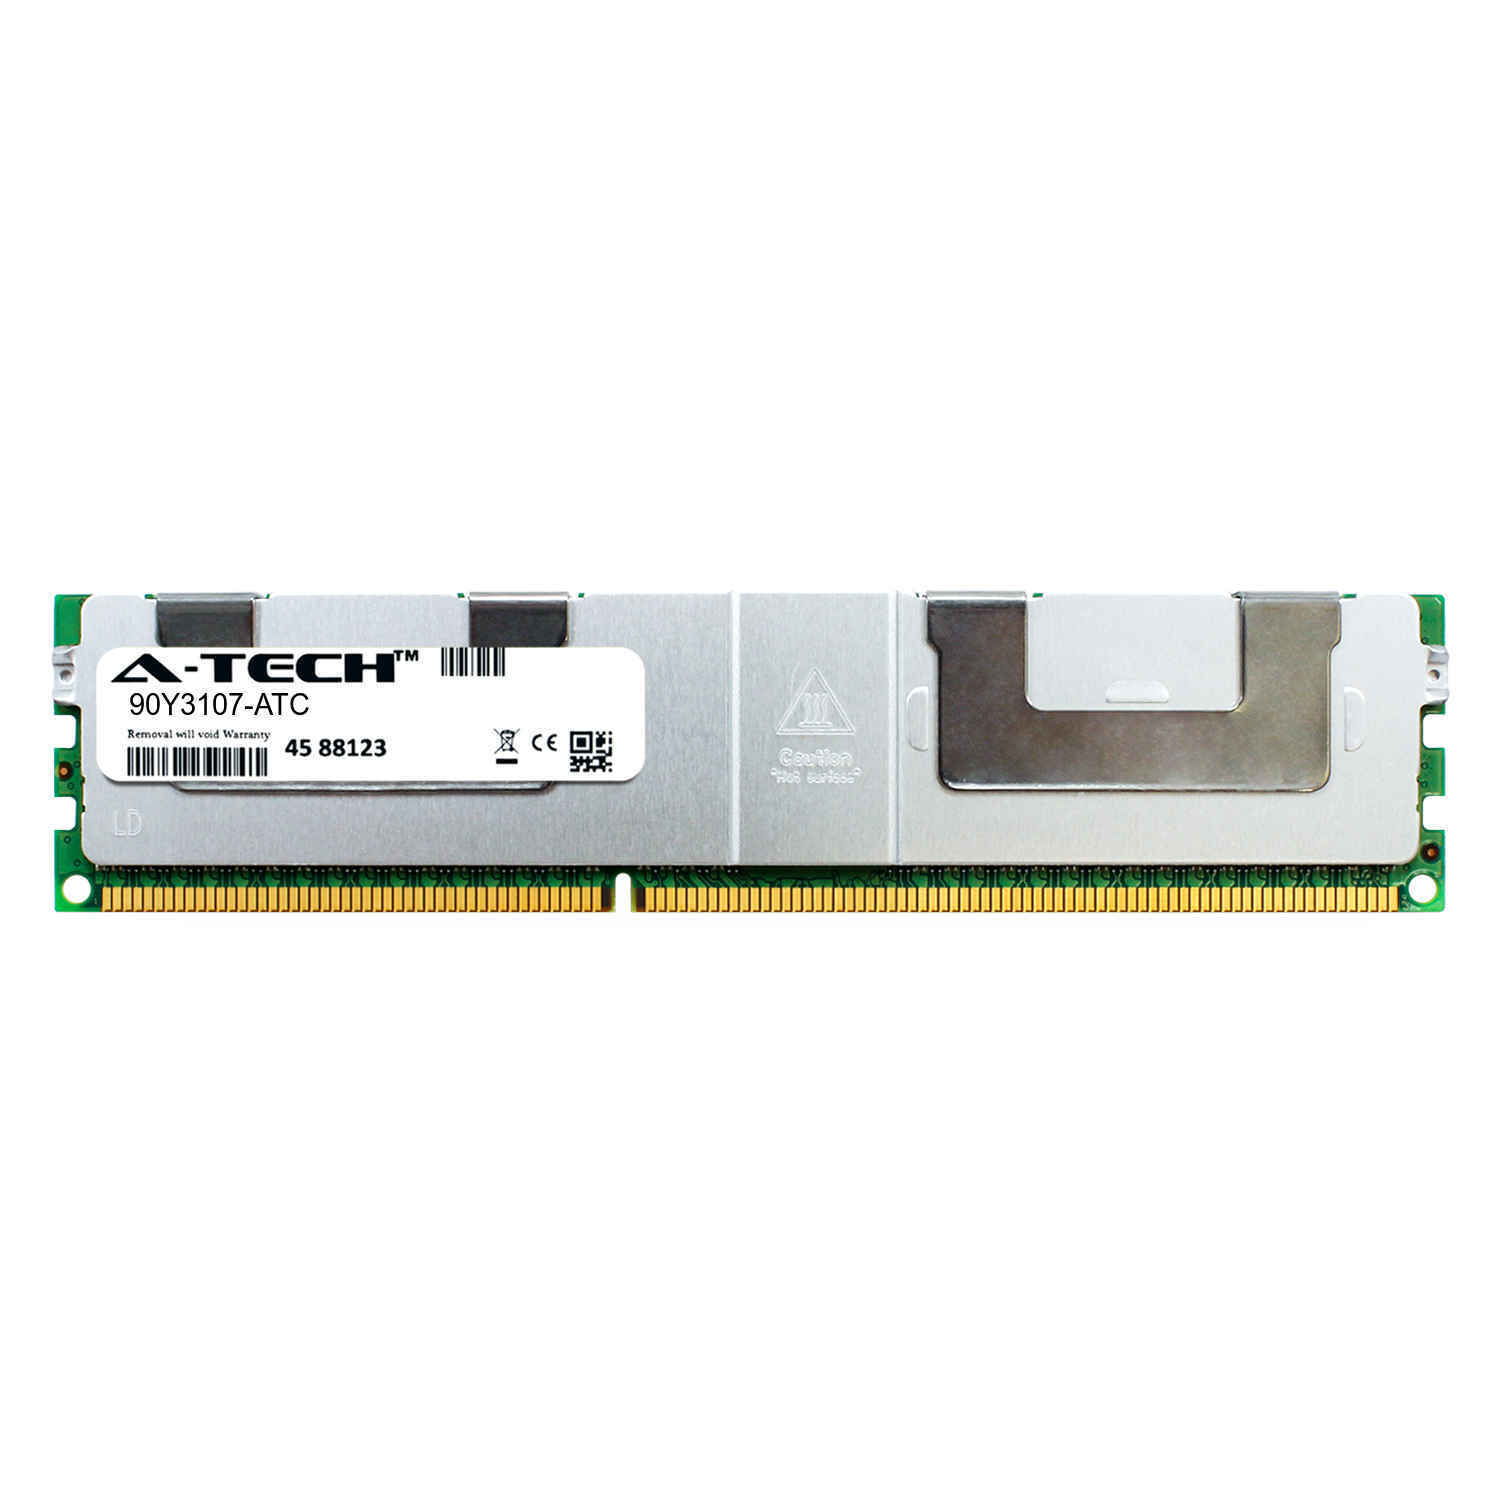 32GB DDR3 PC3-10600L 1333MHz LRDIMM (IBM 90Y3107 Equivalent) Server Memory RAM